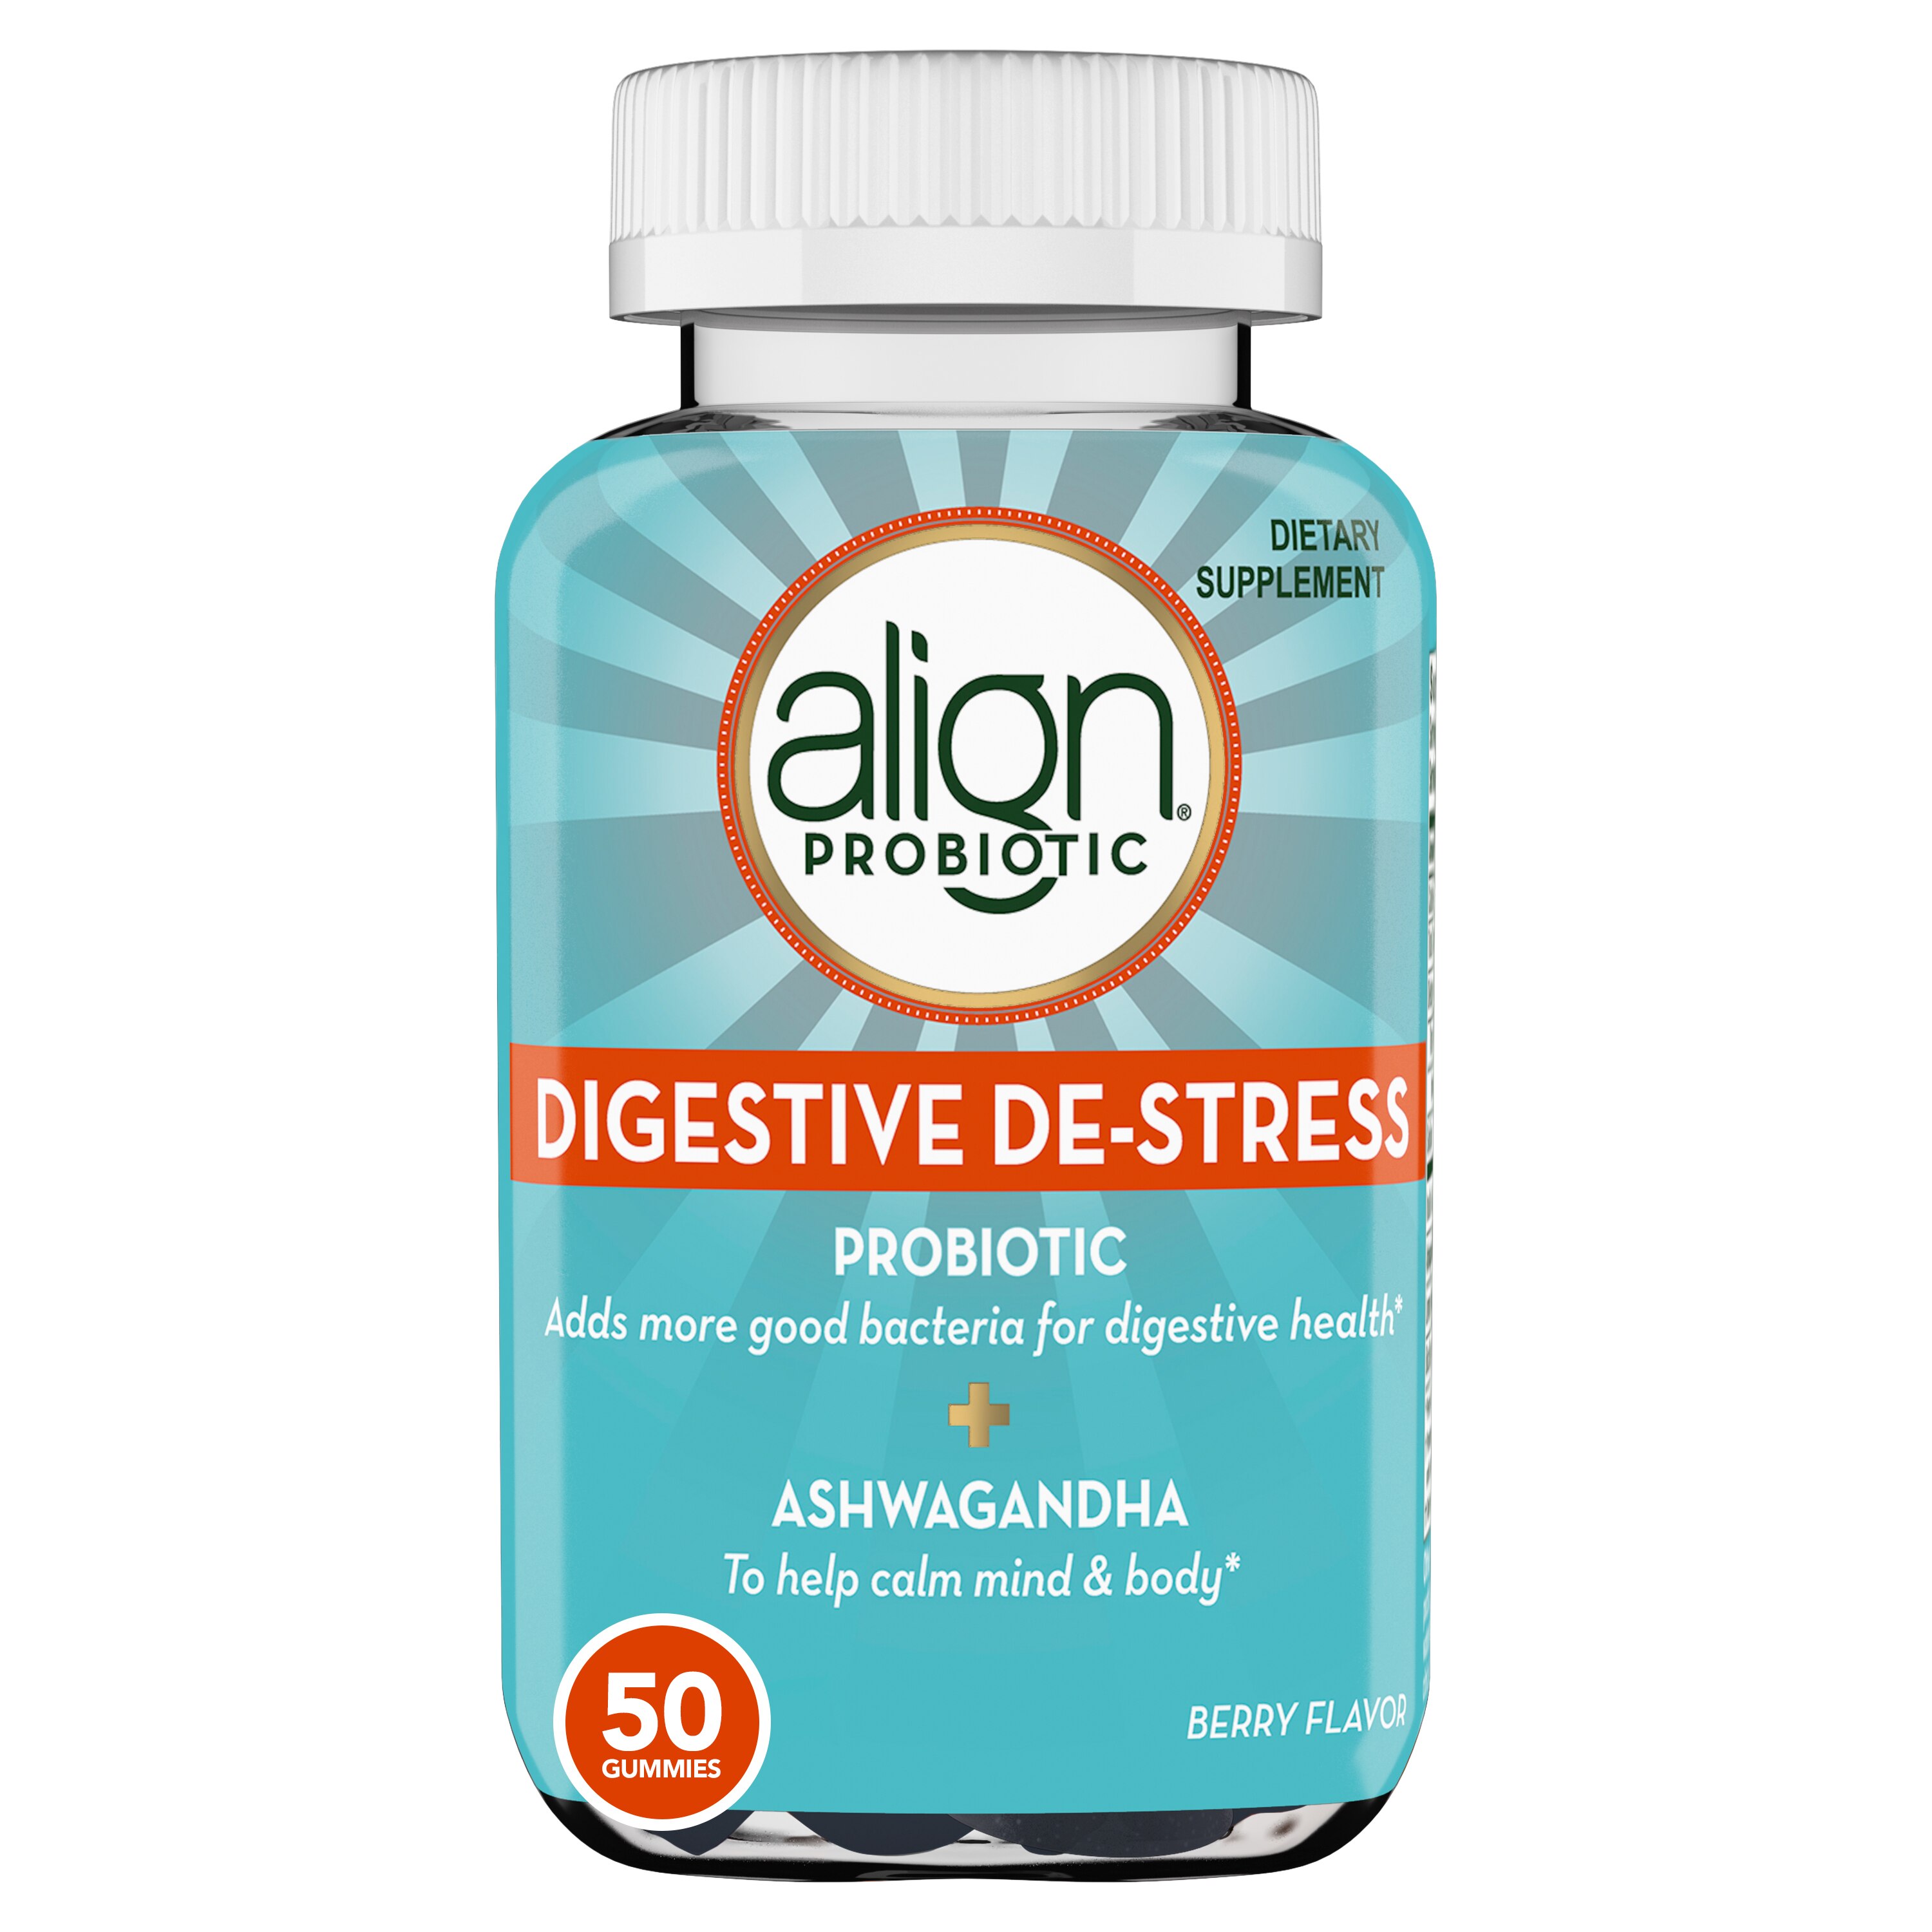  Align DIGESTIVE DE-STRESS Probiotic + Herbal Ashwagandha Supplement � Digestive Health for Men & Women, Berry Flavor � 50 Gummies, #1 Doctor Recommend 